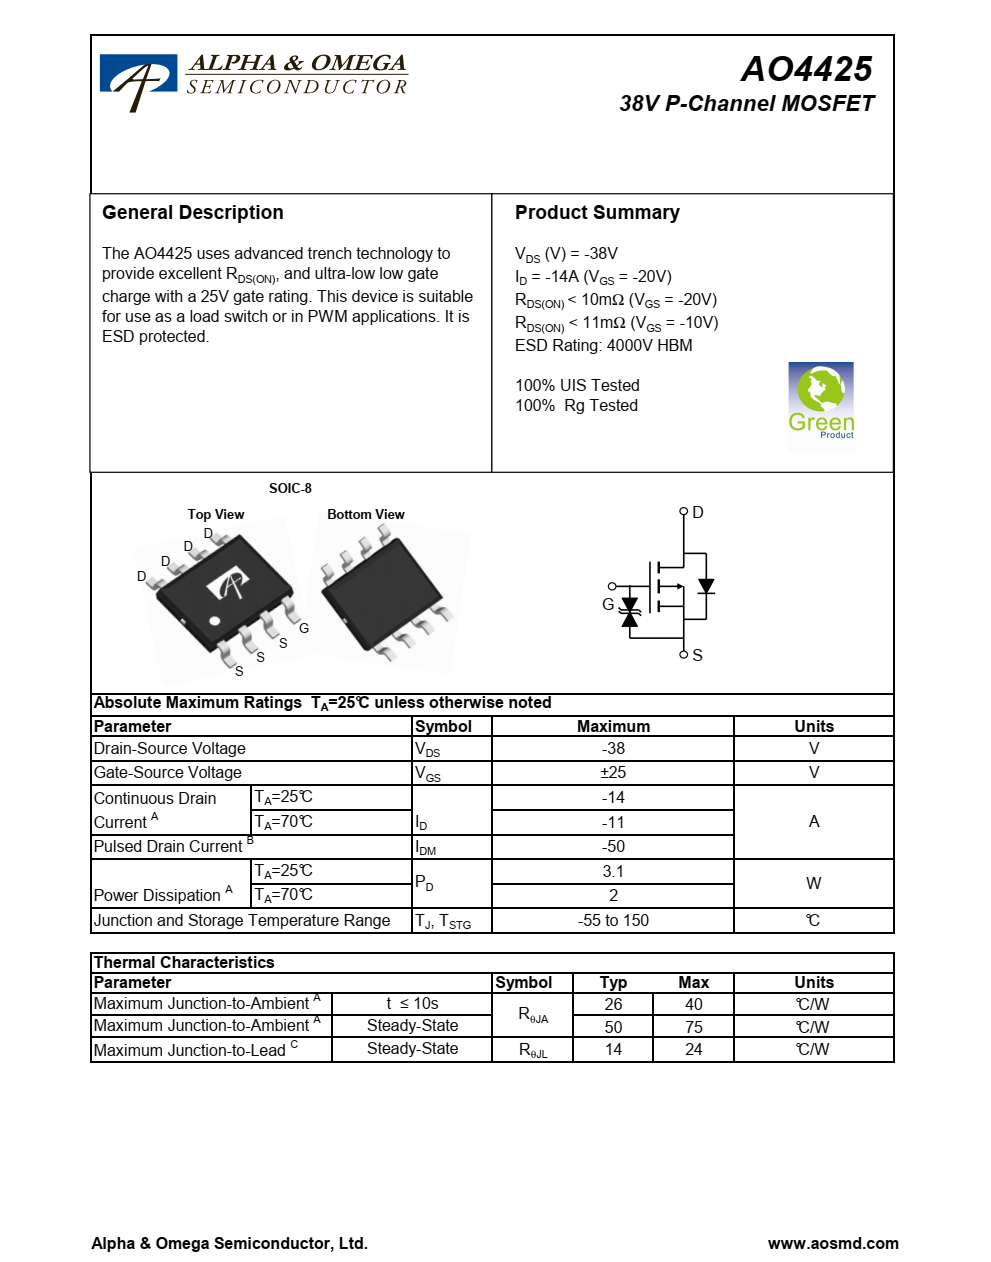 AO4425采用先进的沟槽技术提供卓越的RDS（ON）和超低栅极使用25V栅极额定值充电